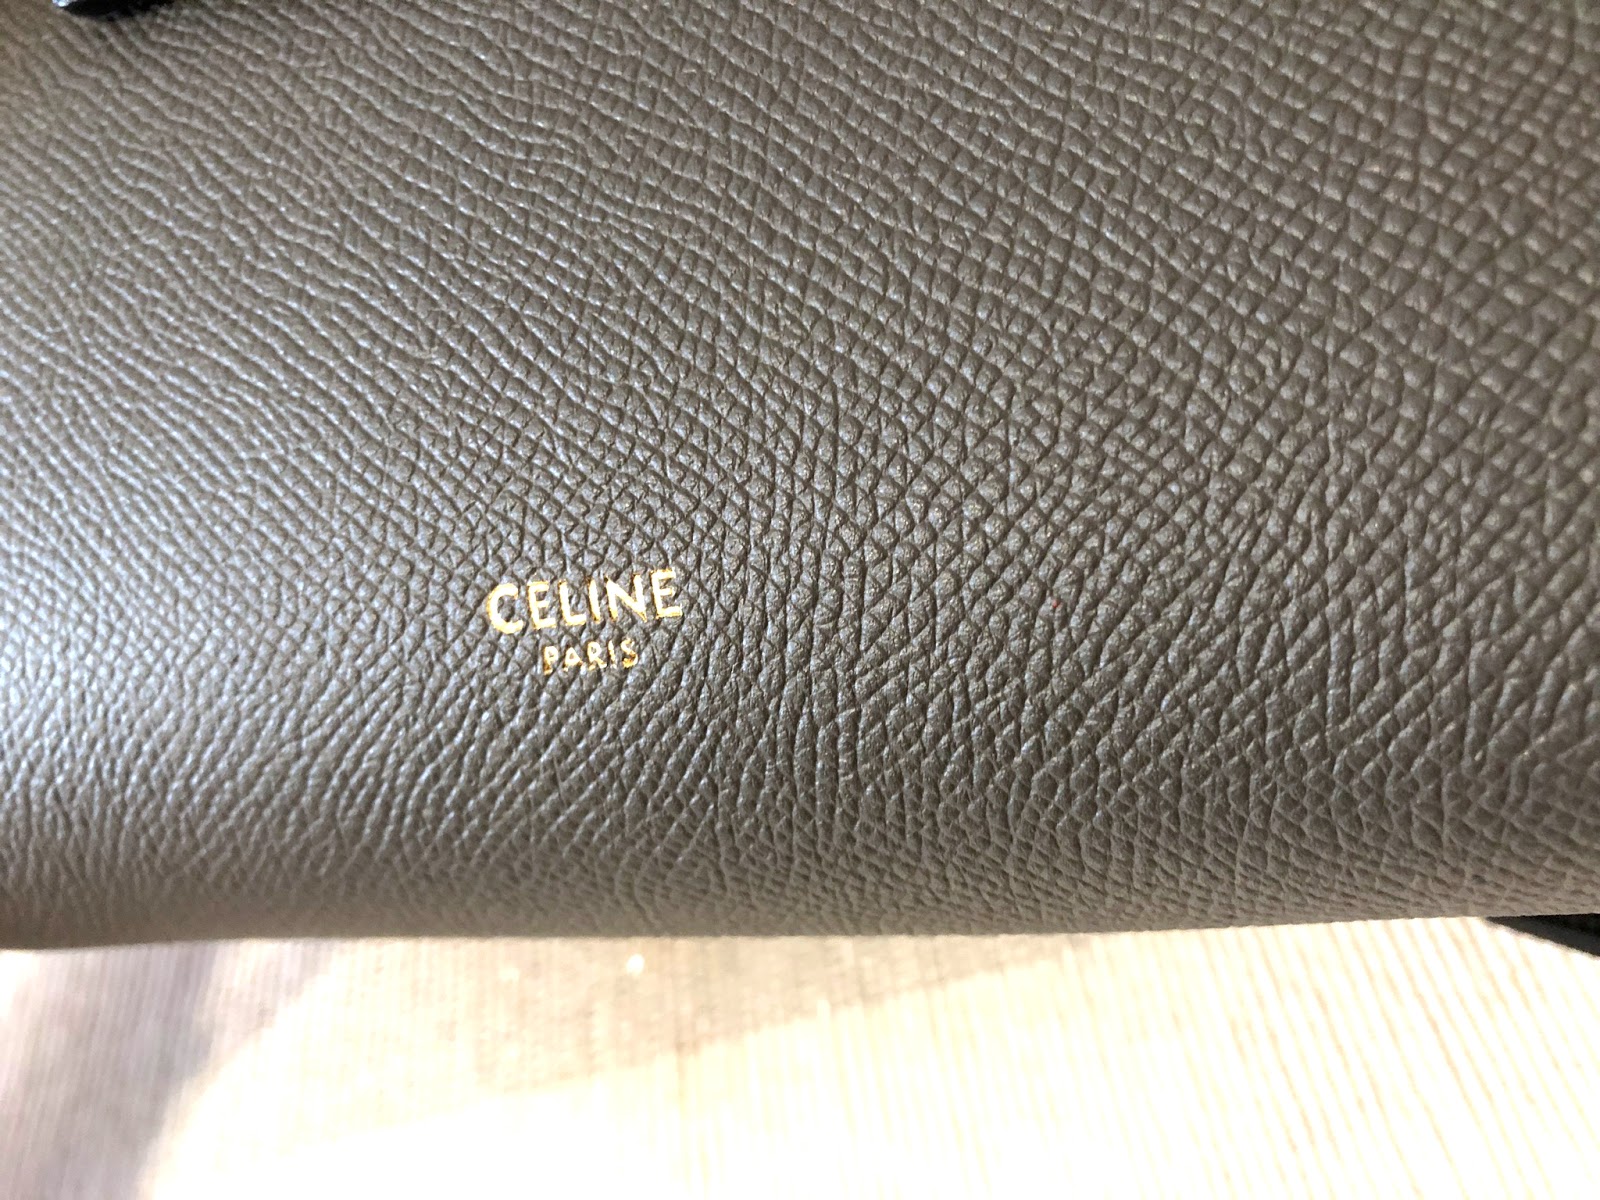 Celine Nano Belt Bag, Old Vs. New // Quality Difference? Hardware